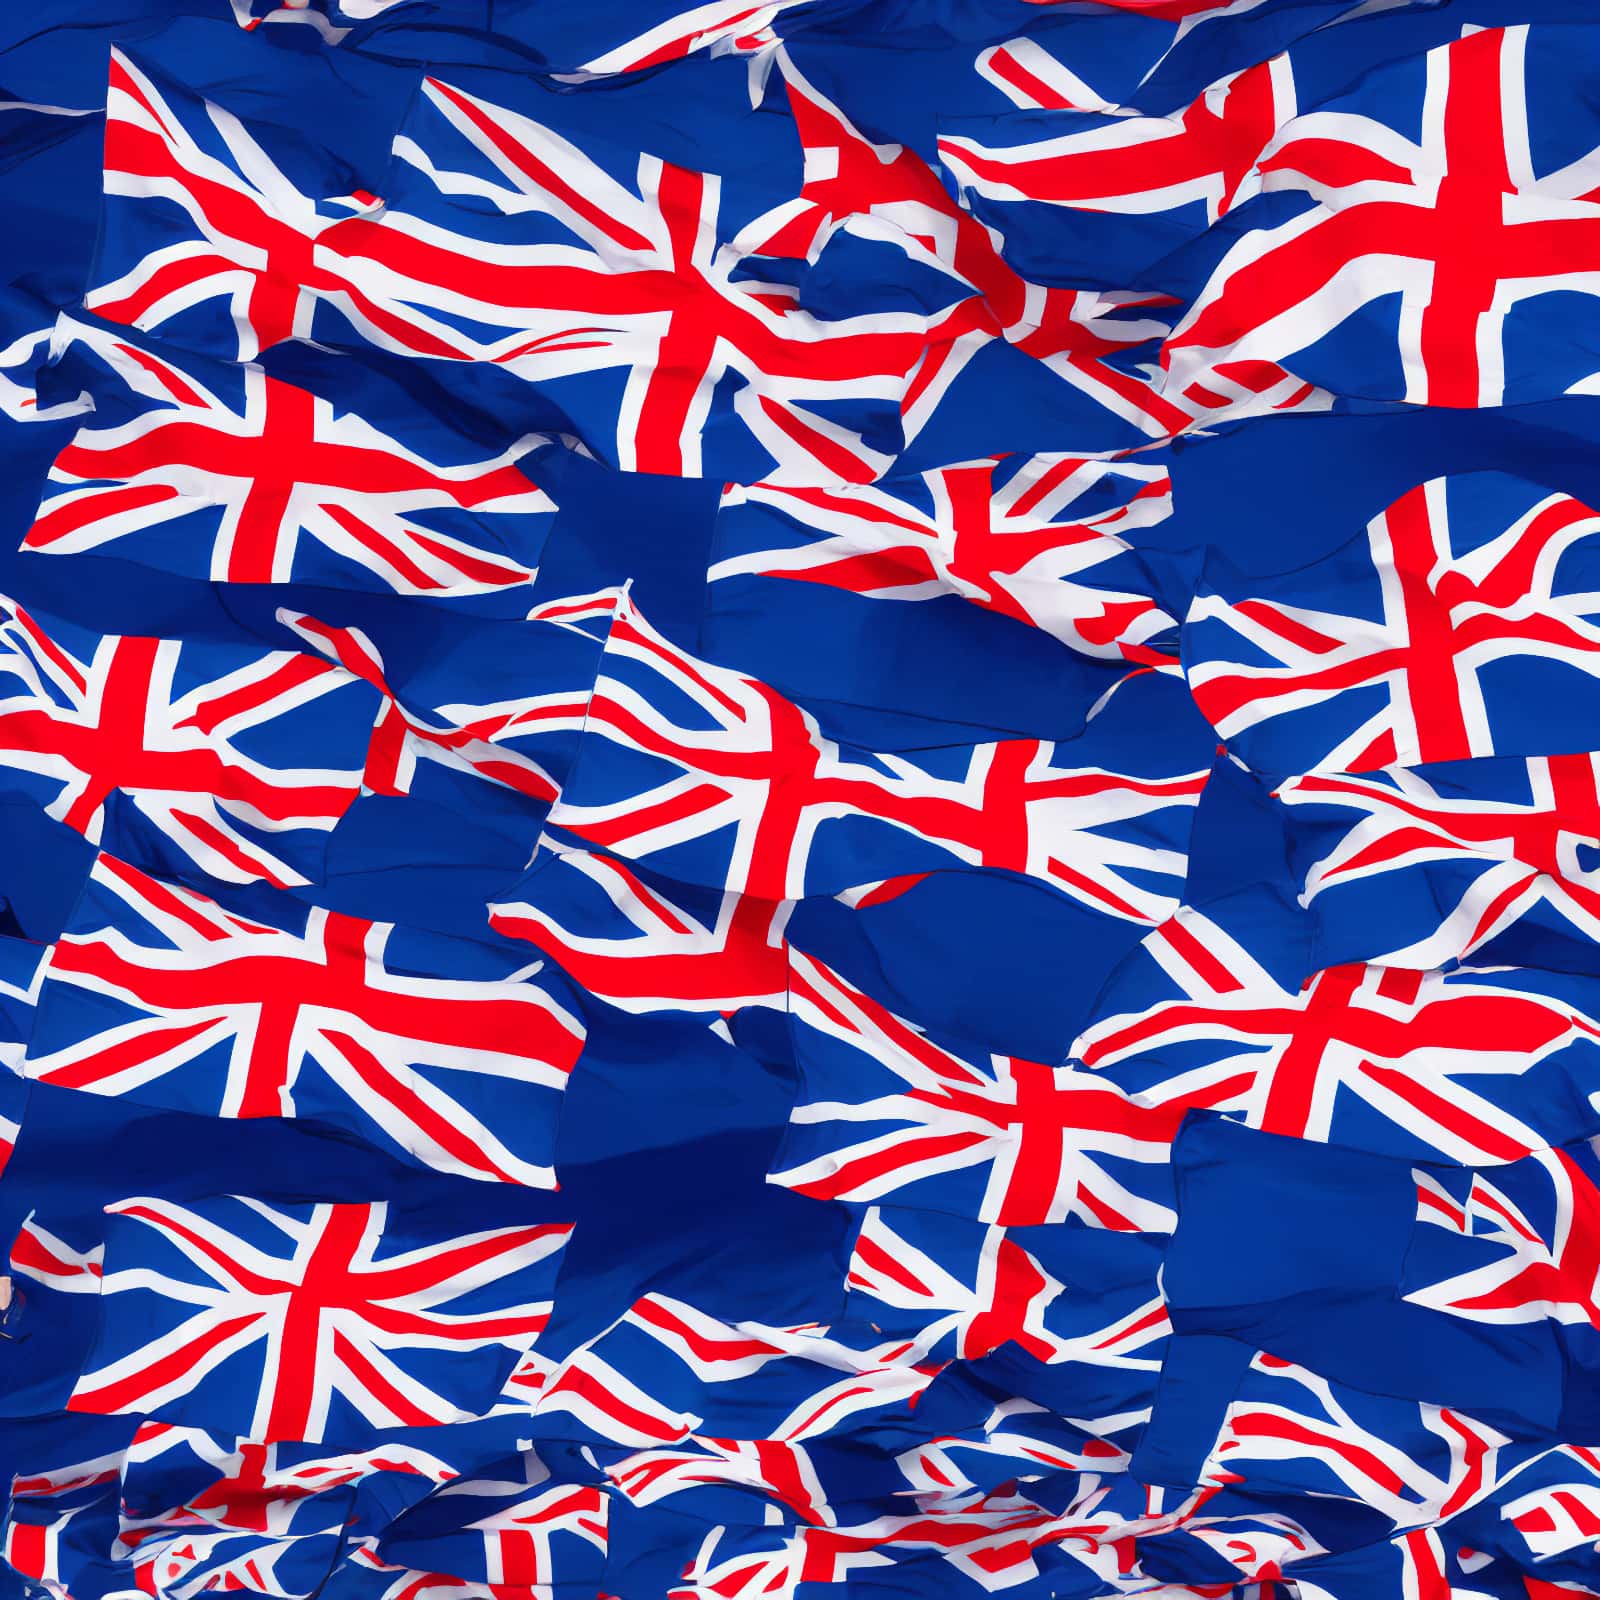 UK flags Fascism Flag Waving